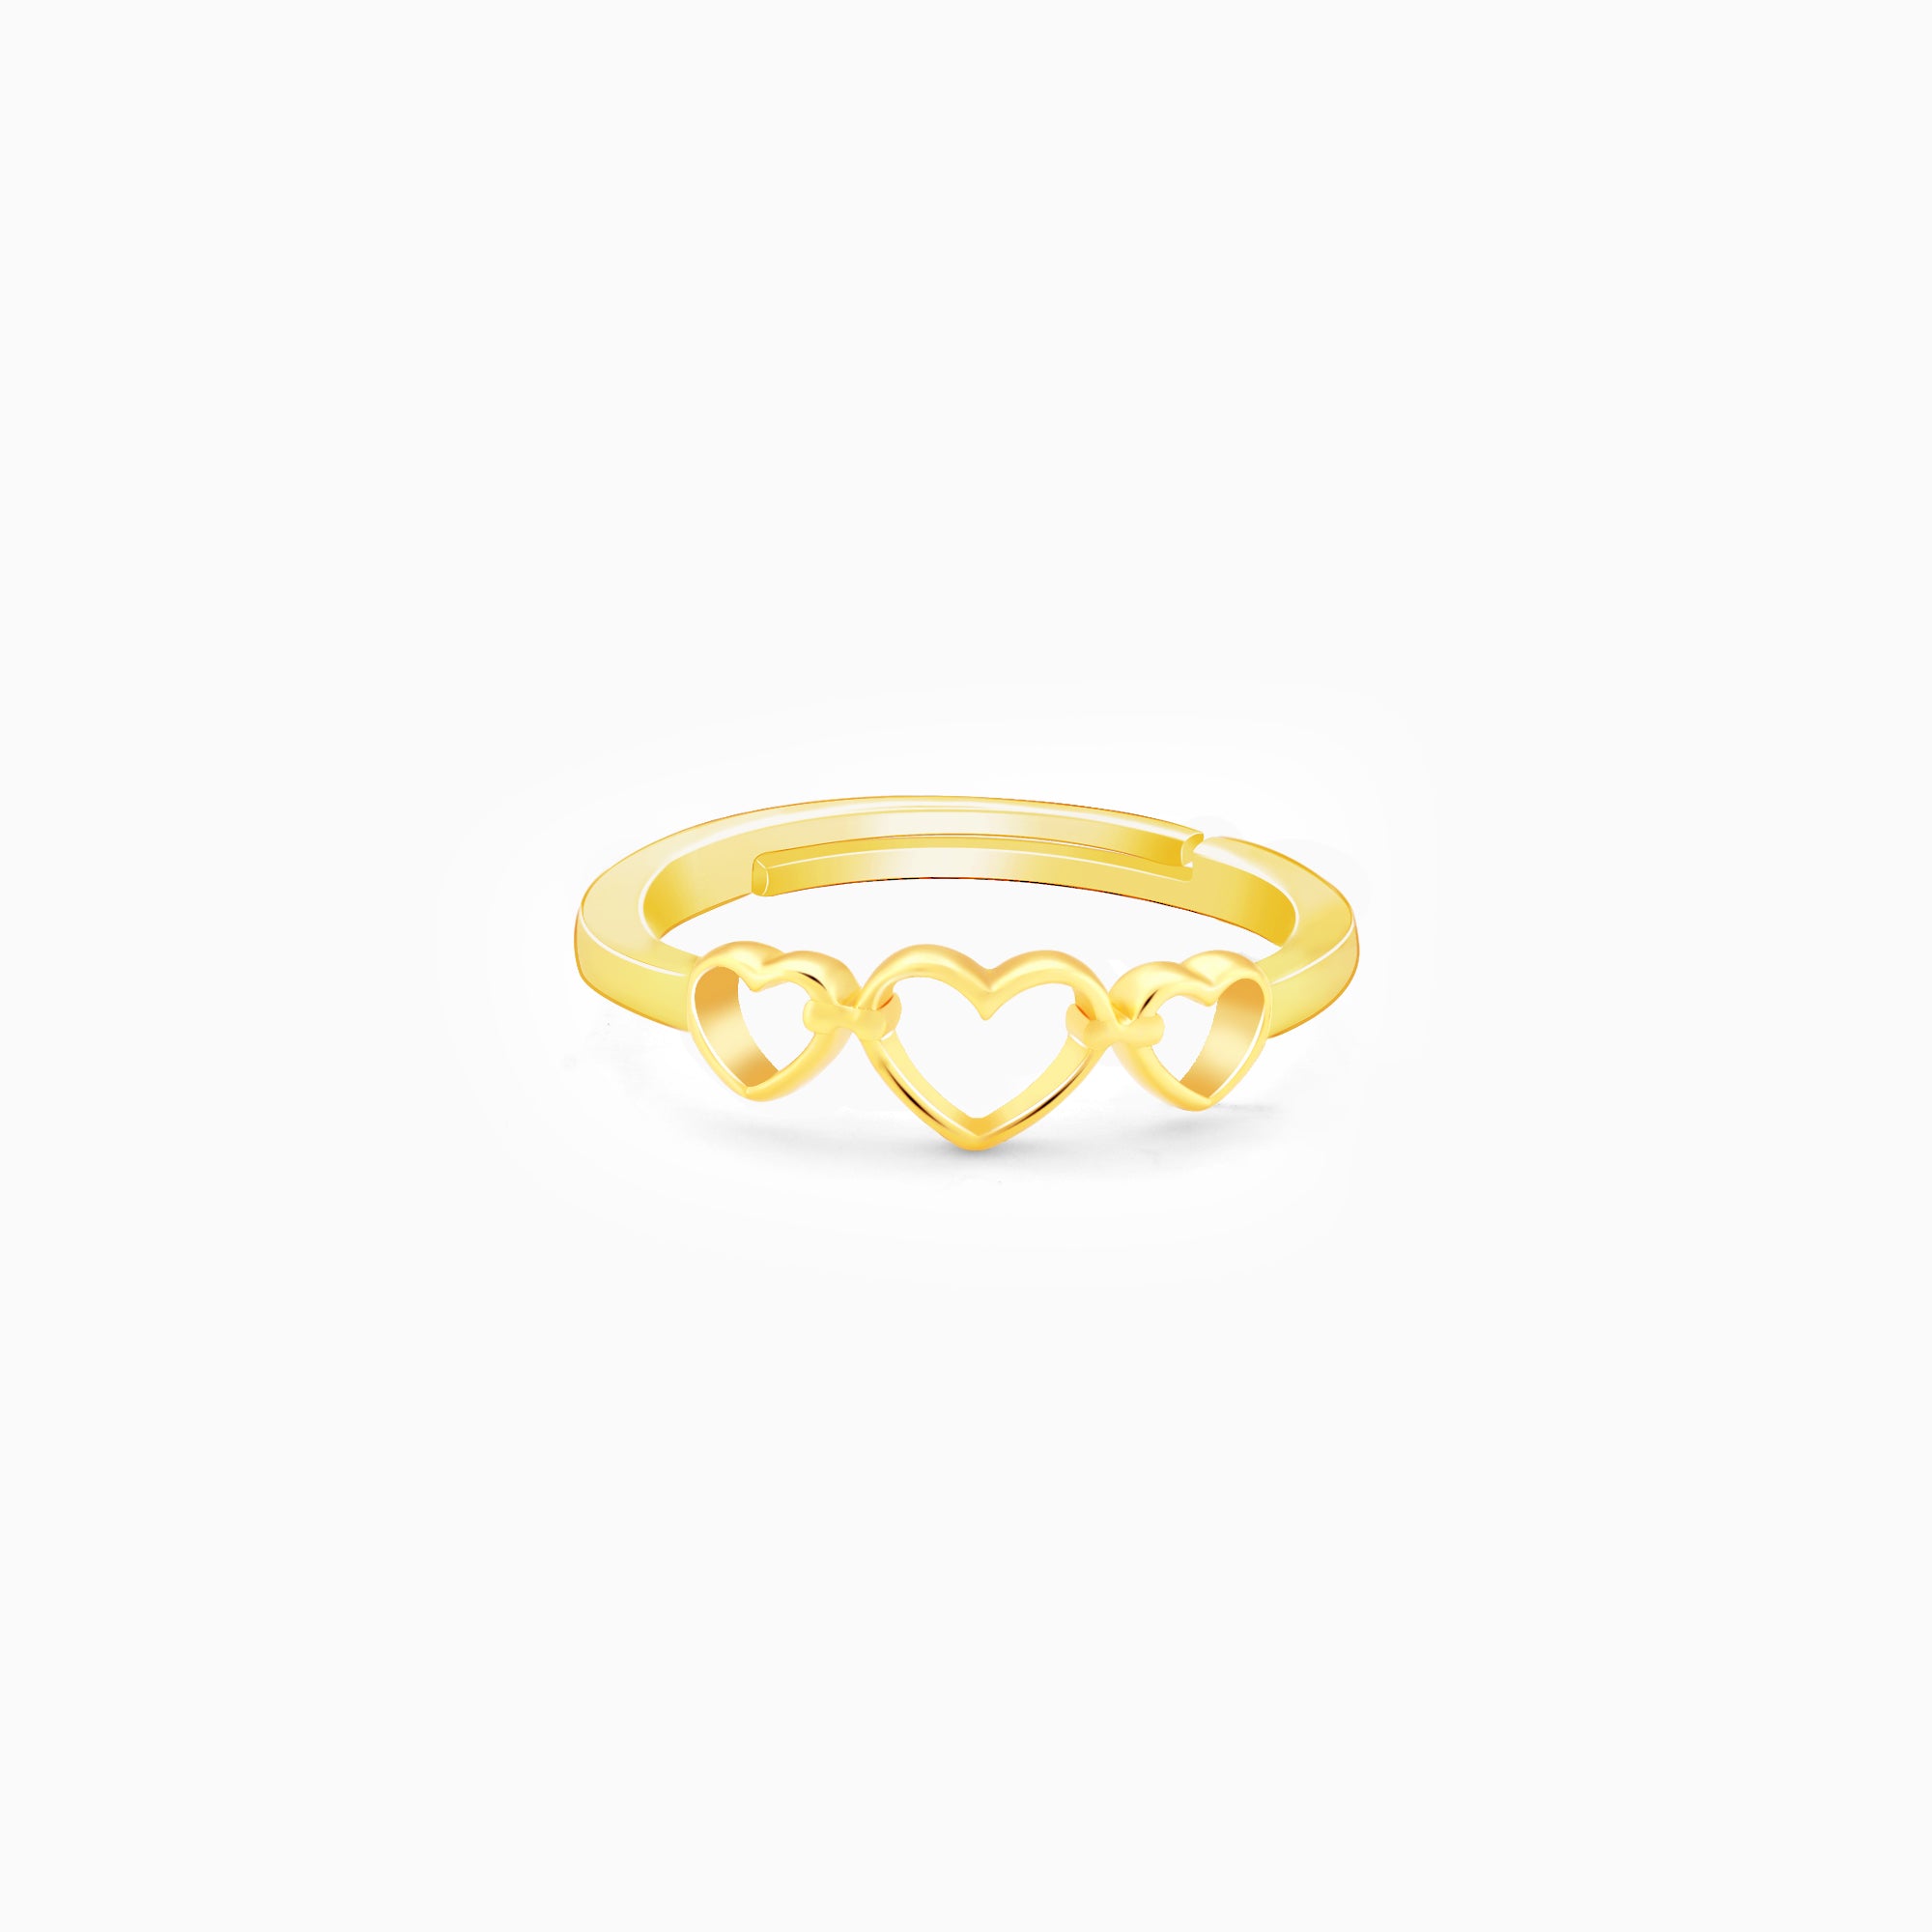 Showroom of 22k gold heart shape single stone ladies ring | Jewelxy - 213748